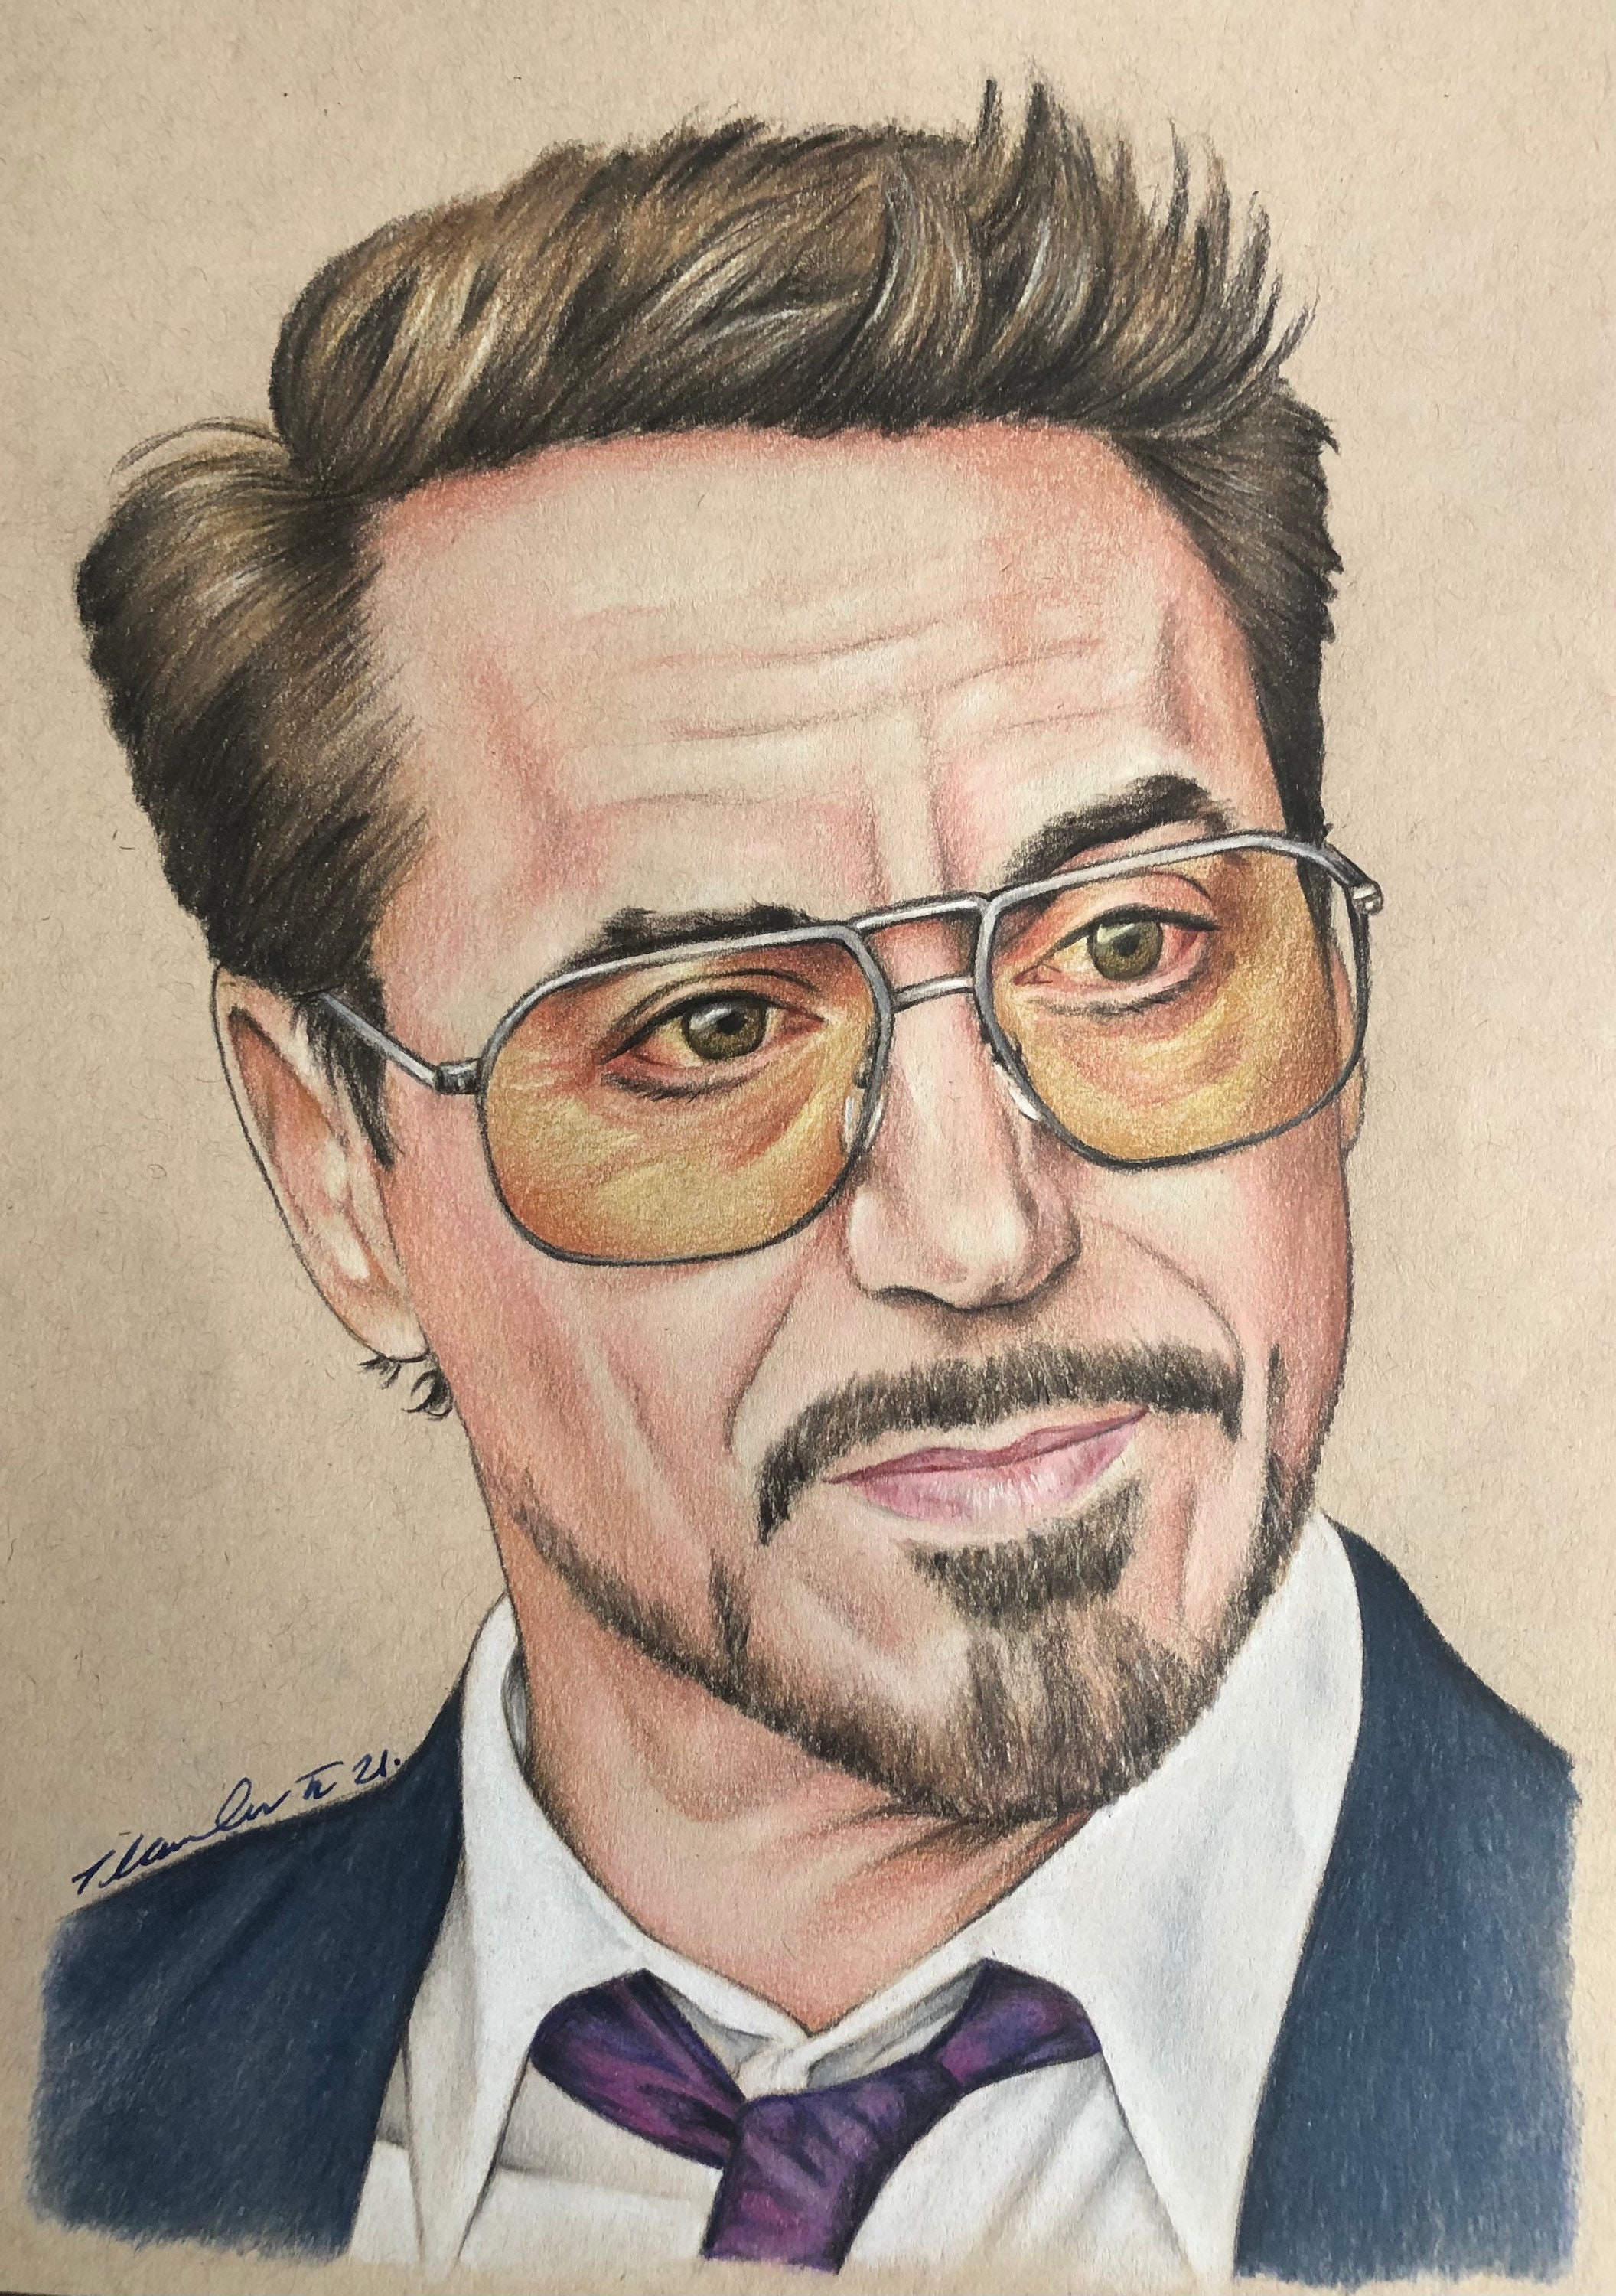 Tony Stark Sketch by Smudgeandfrank on DeviantArt